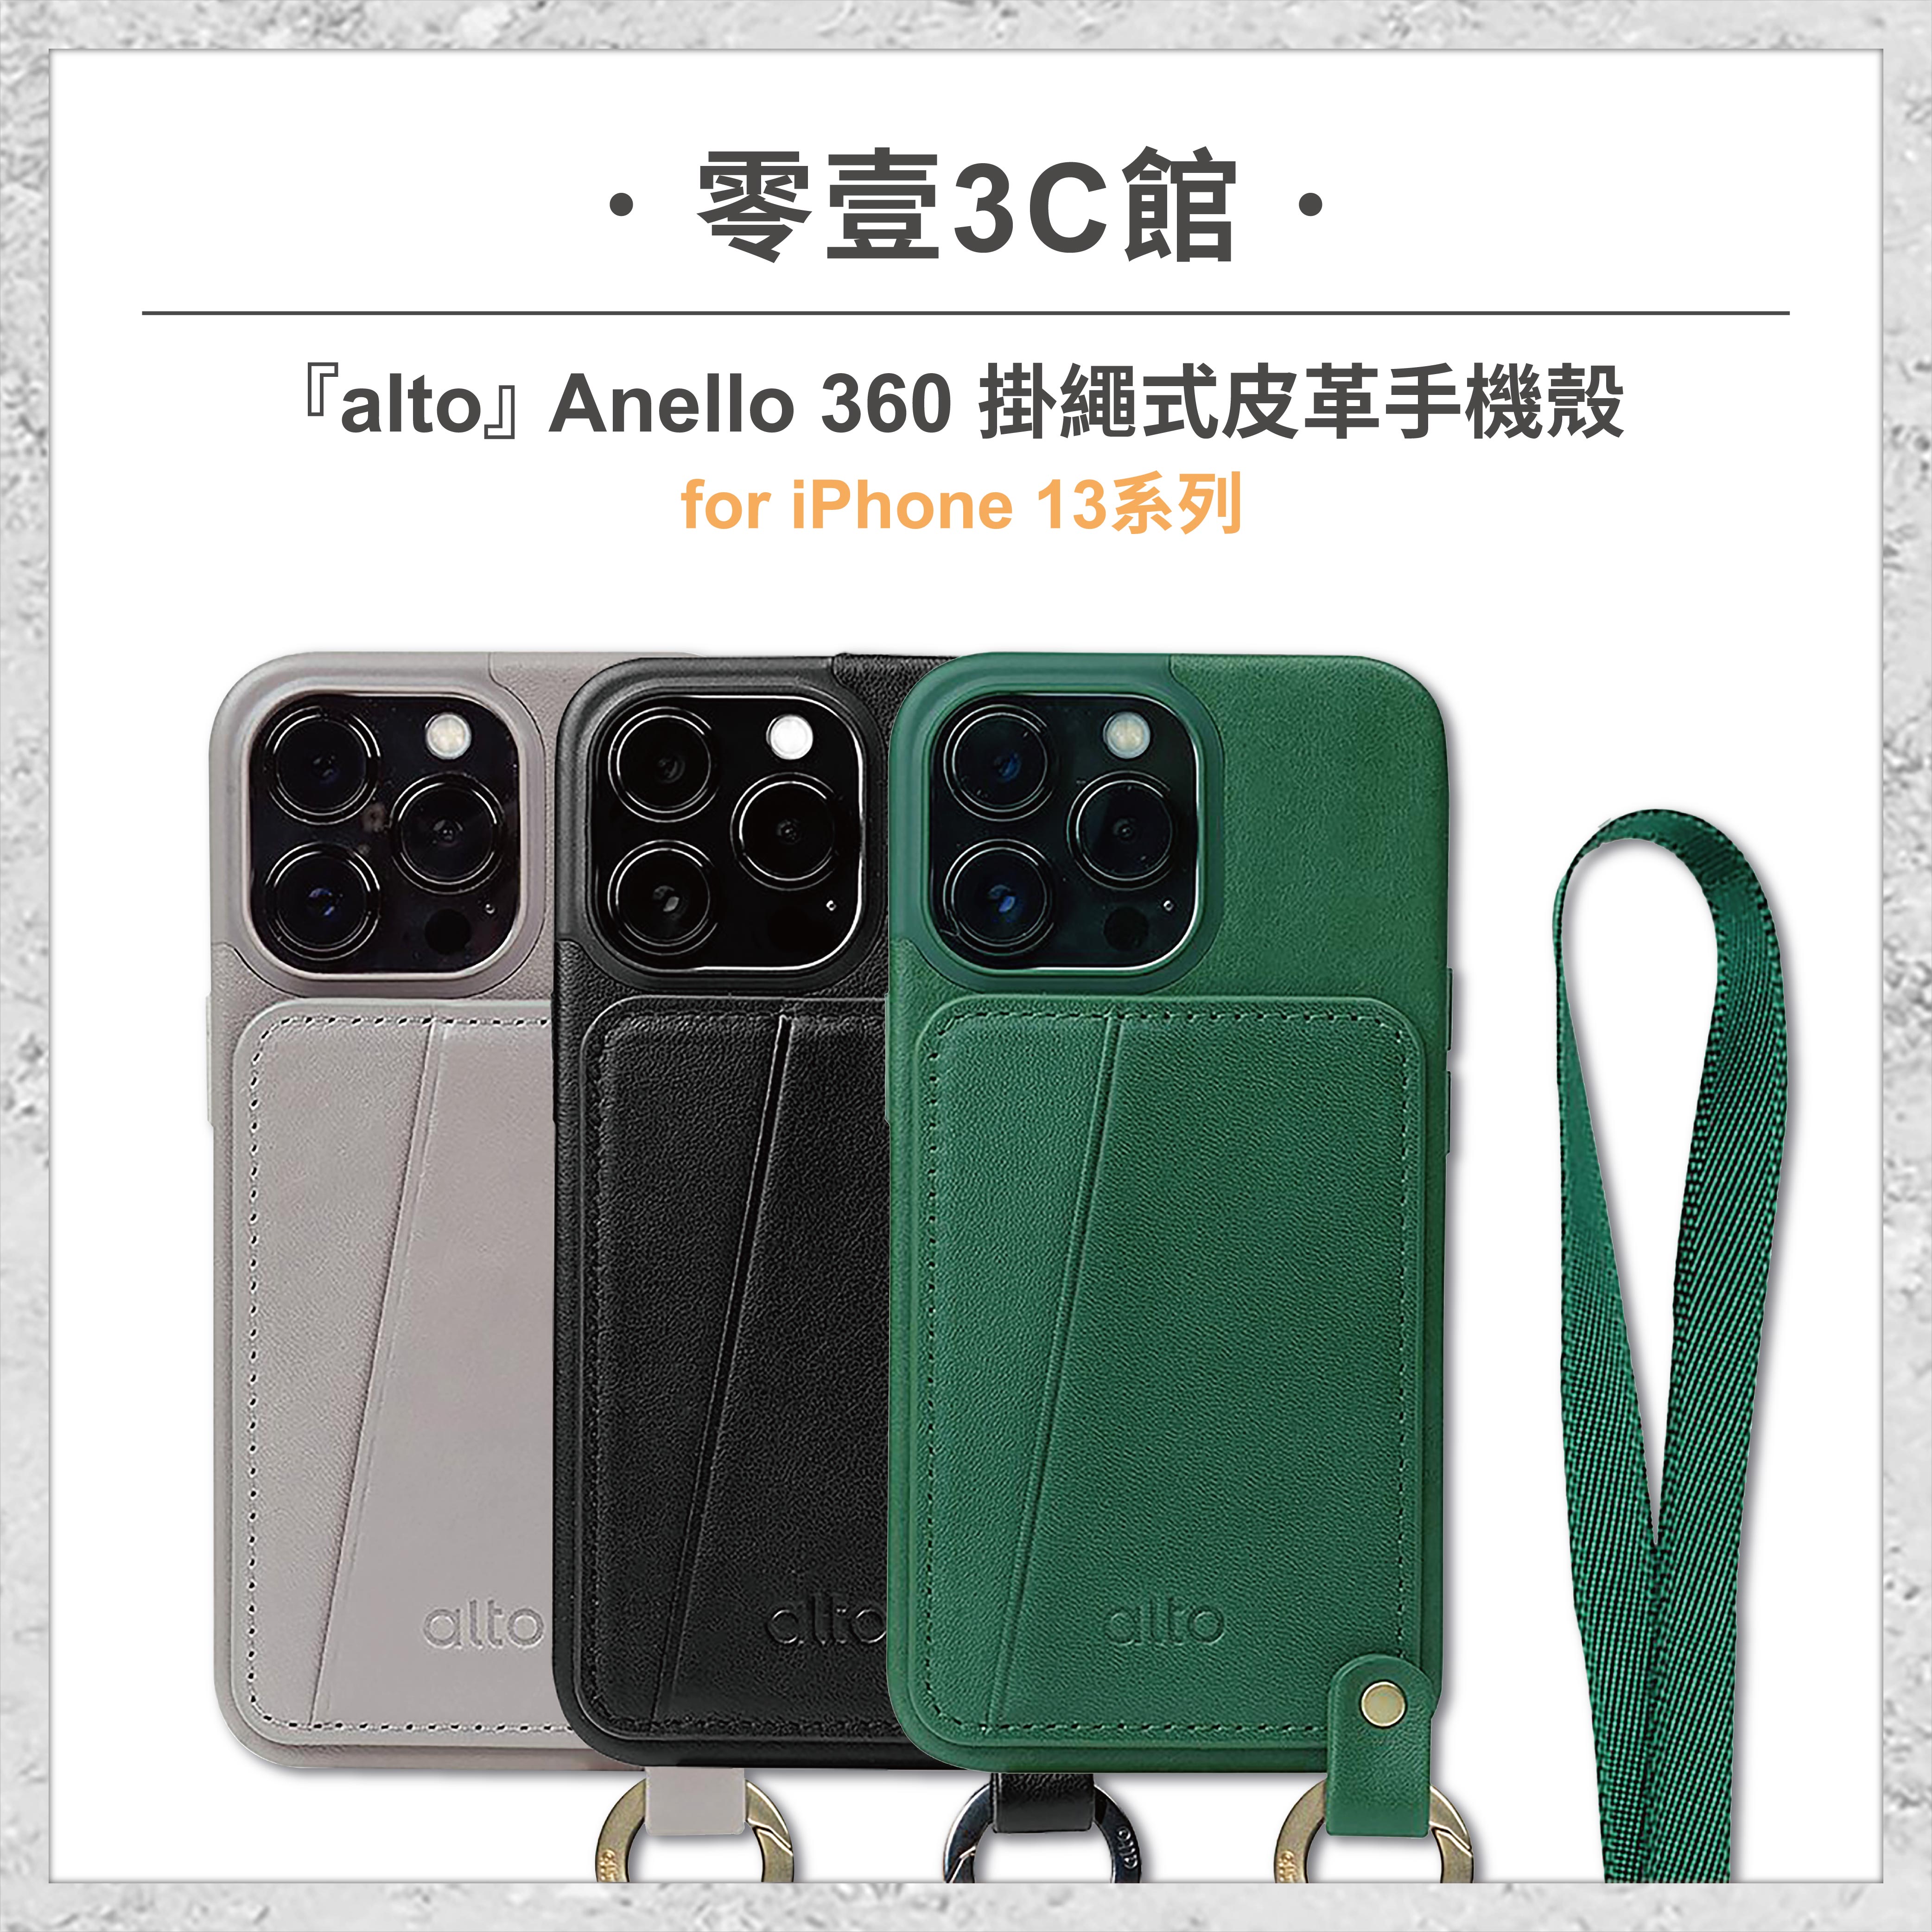 『alto』Anello 360 掛繩式皮革手機殼 for iPhone13系列 手機防摔保護殼